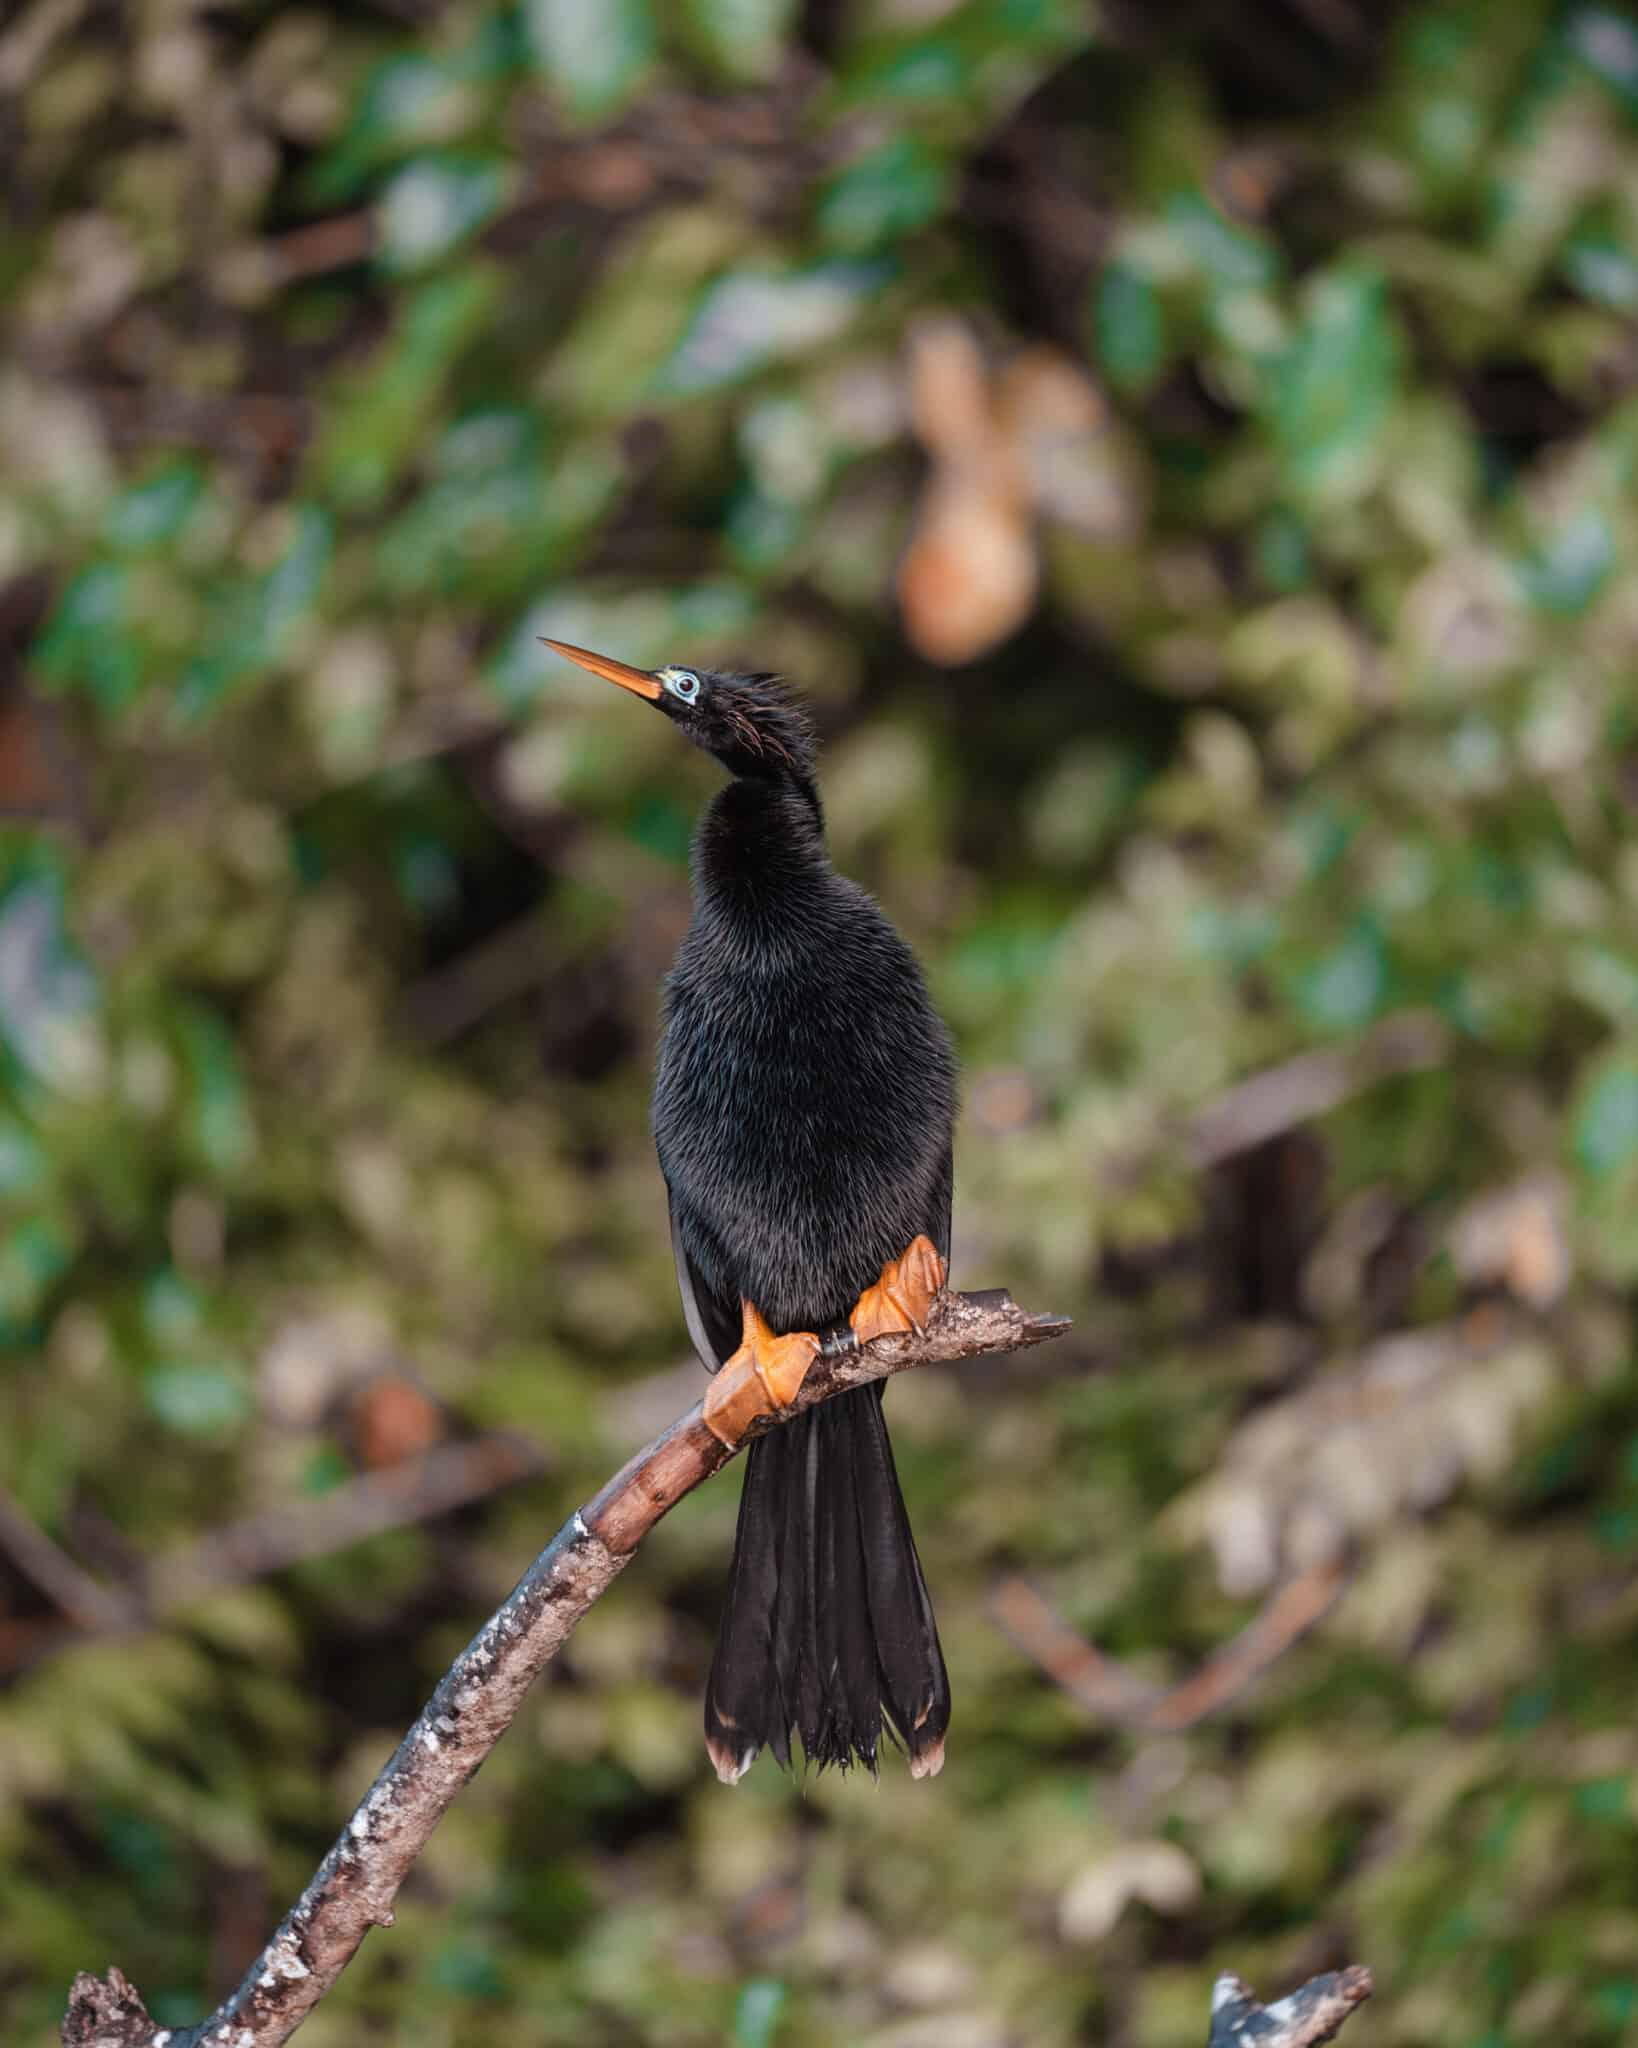 A black bird perched on a branch in Tortuguero, Costa Rica.